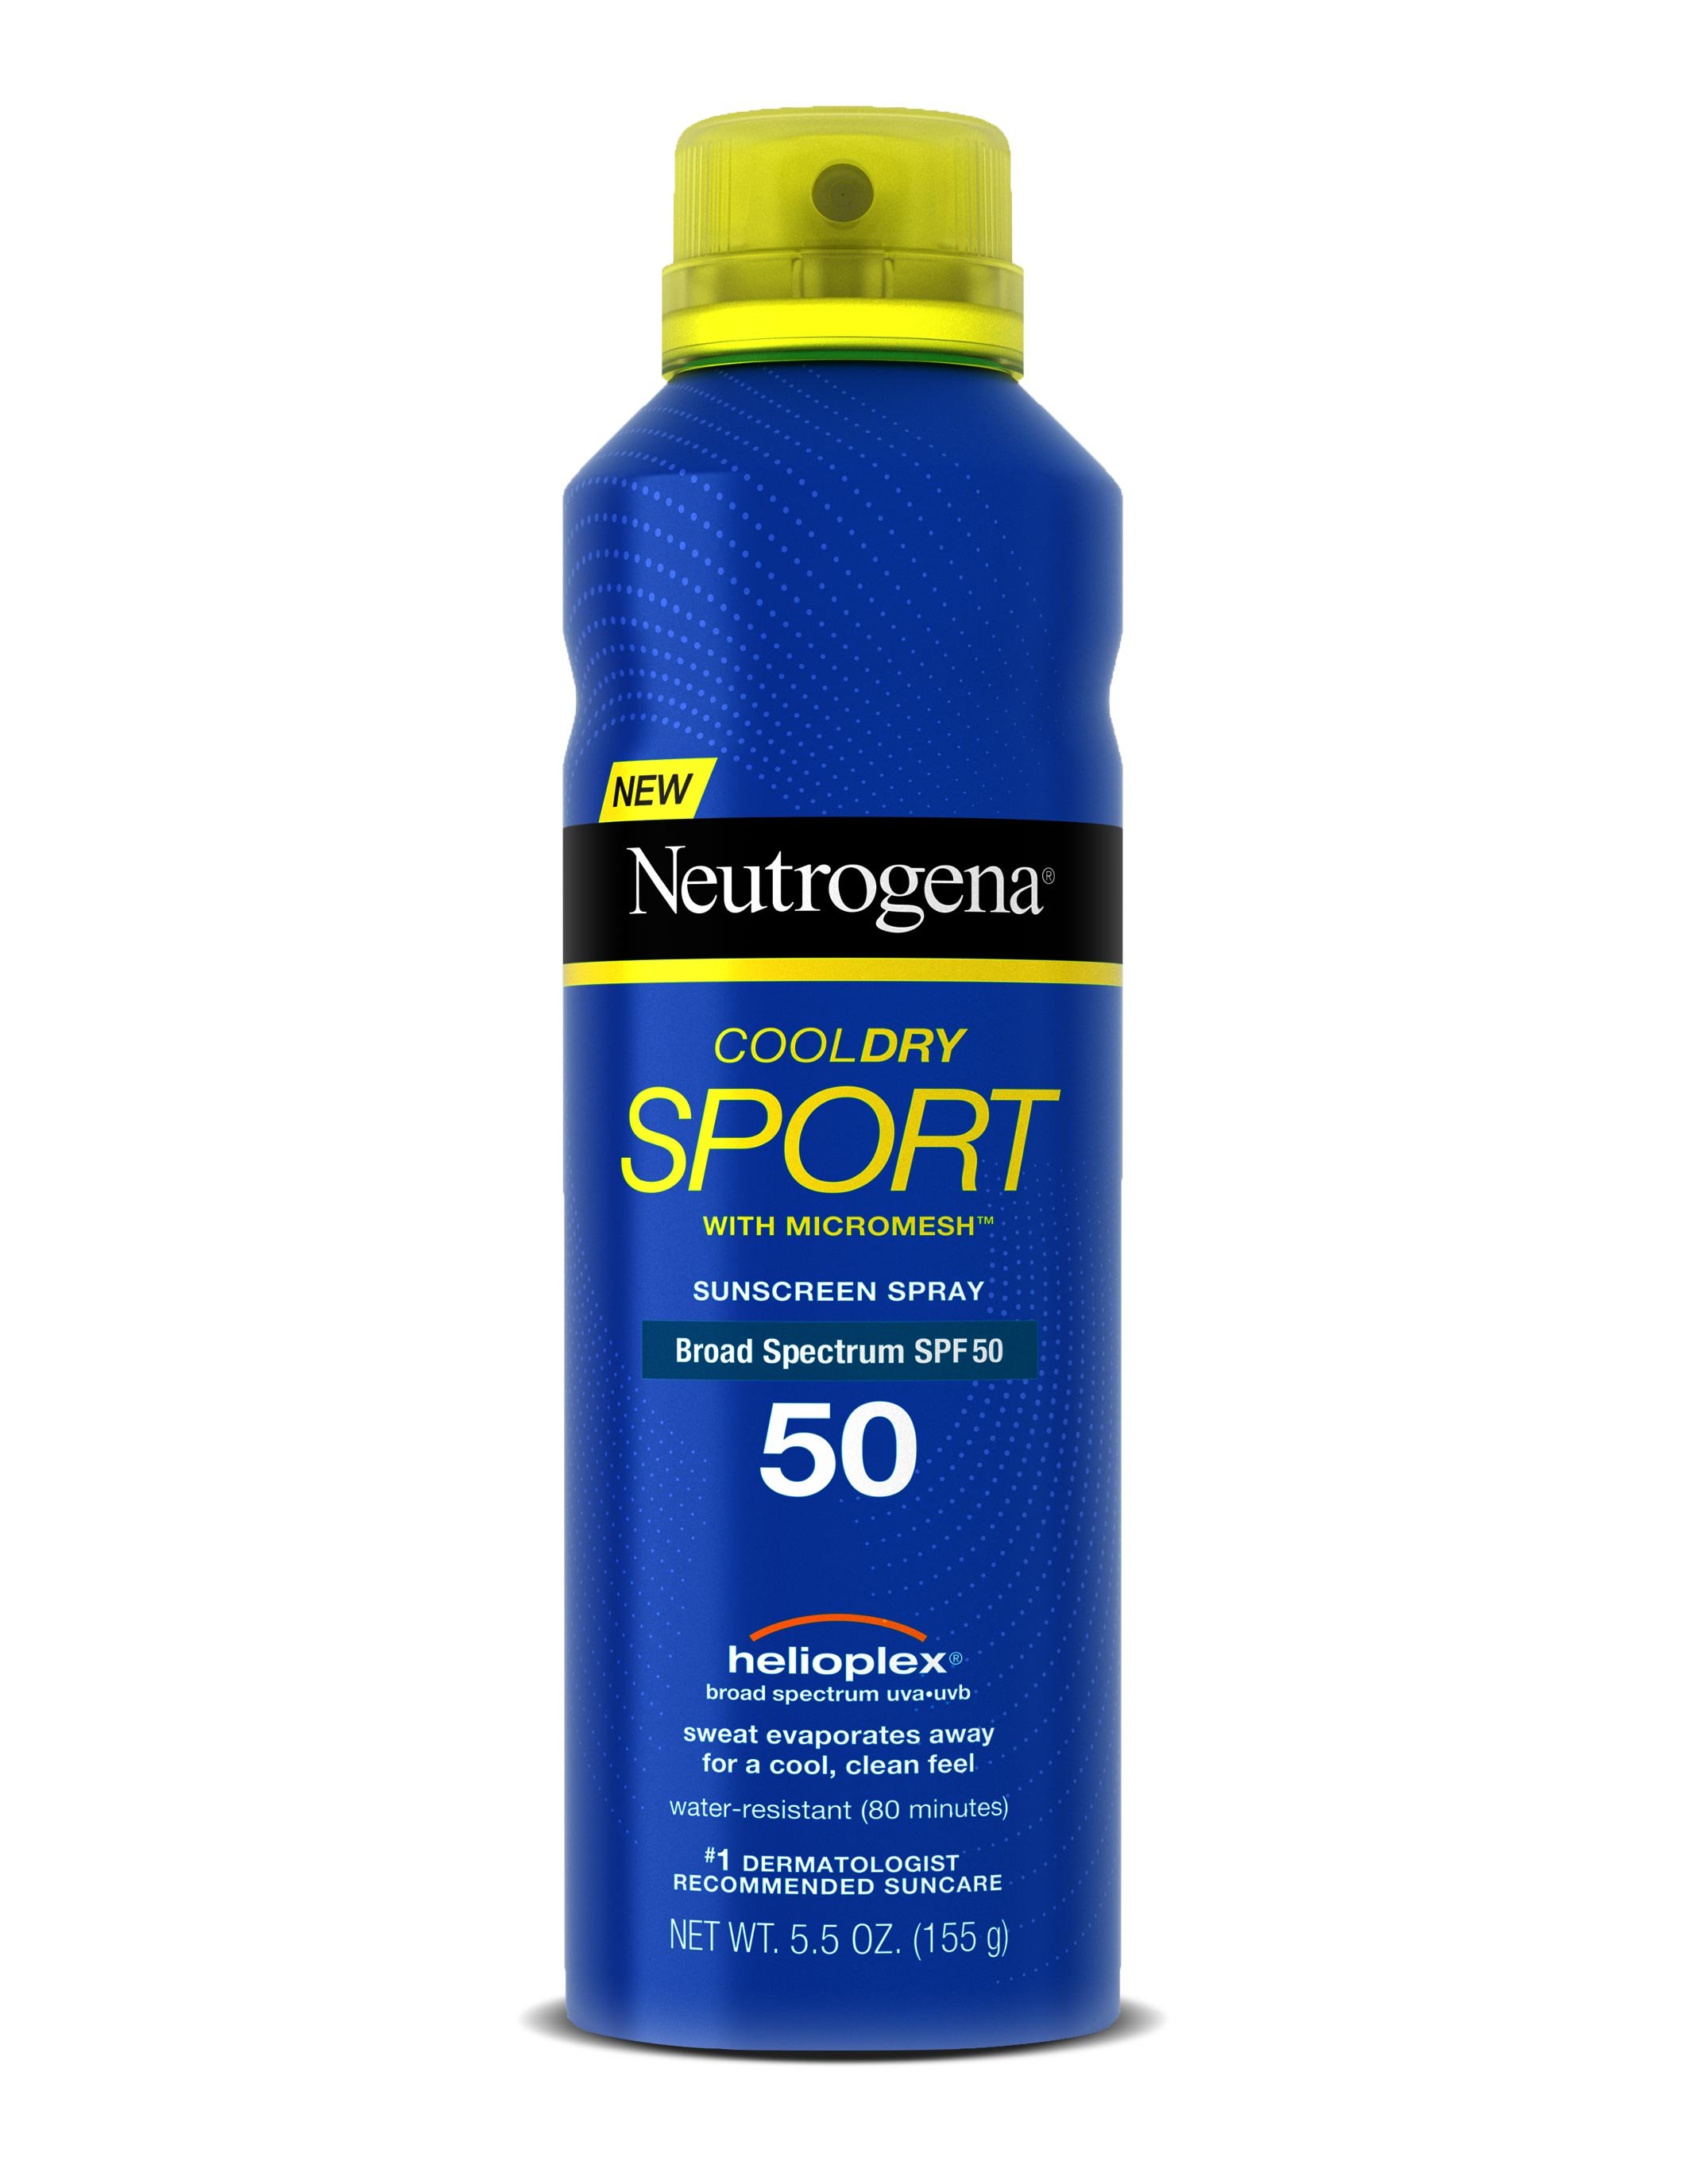 neutrogena-cool-dry-sport.jpg